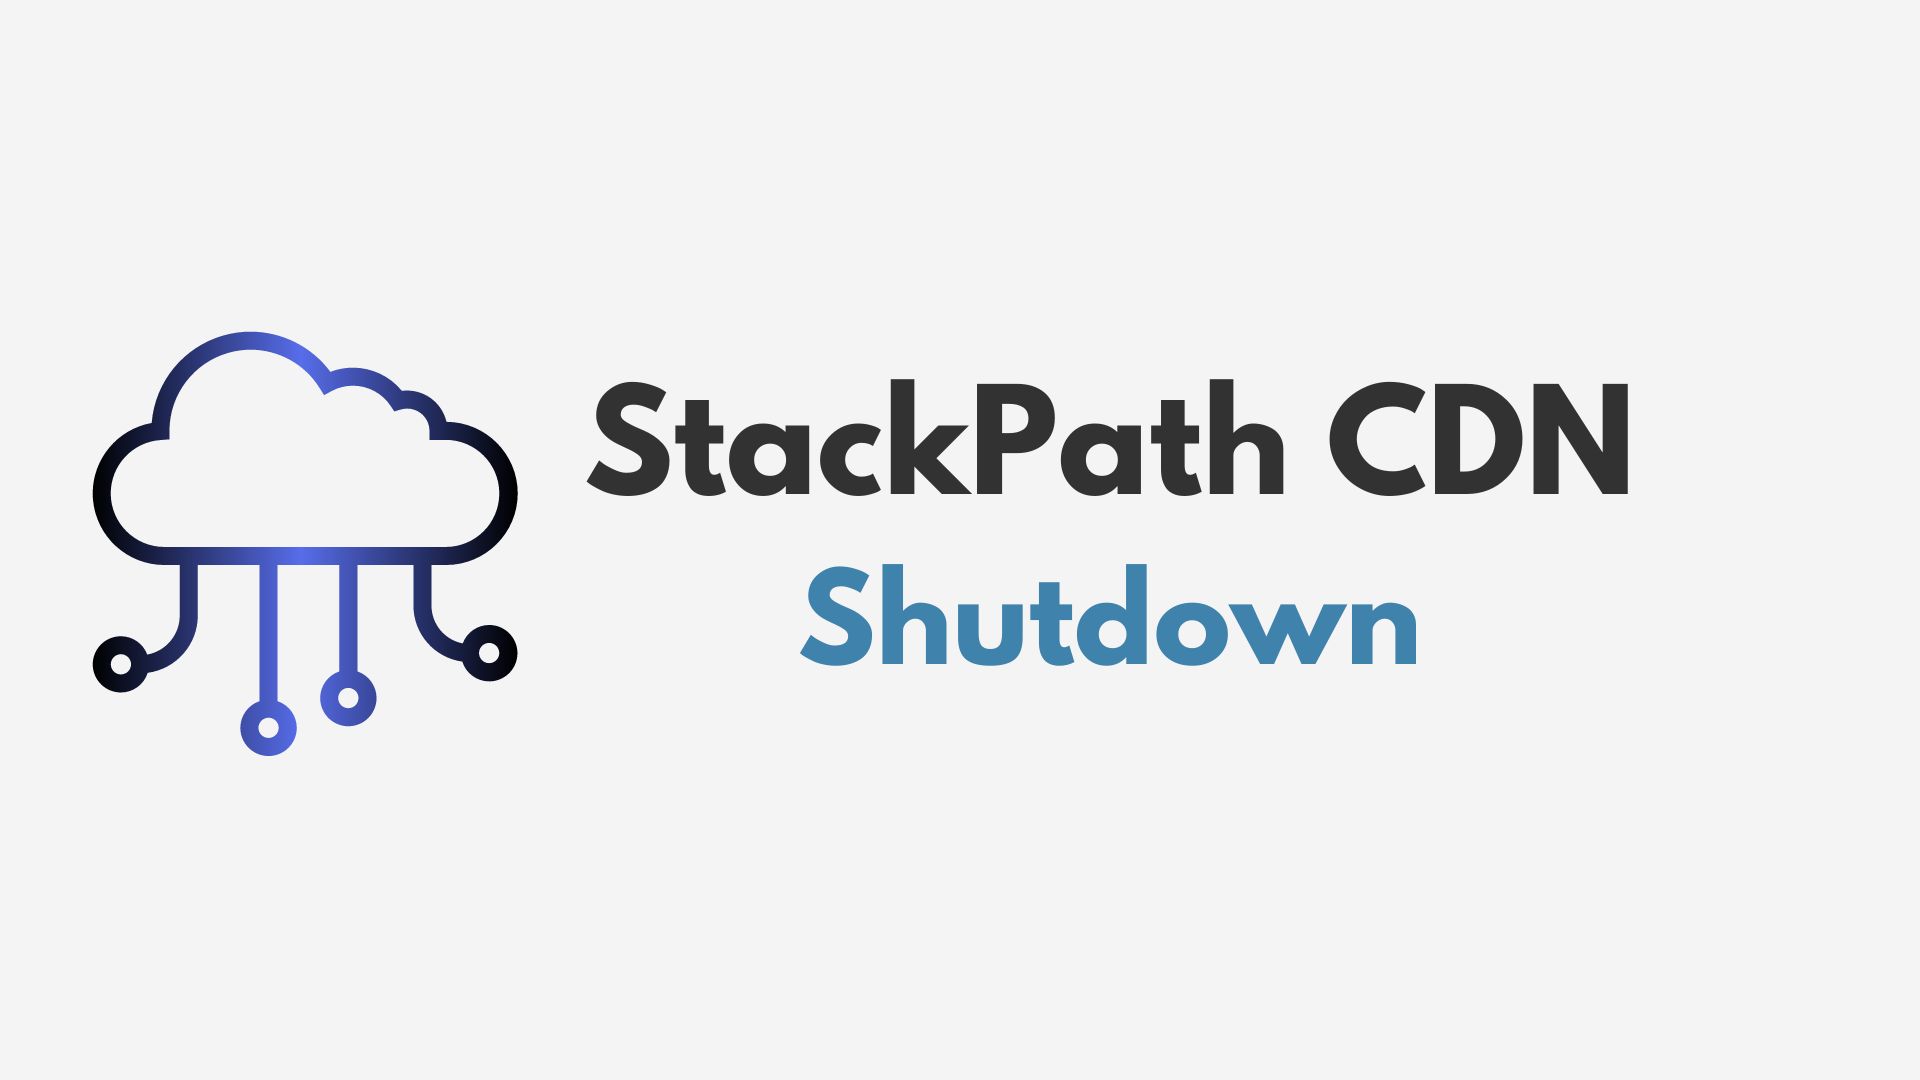 StackPath CDN is shutting down